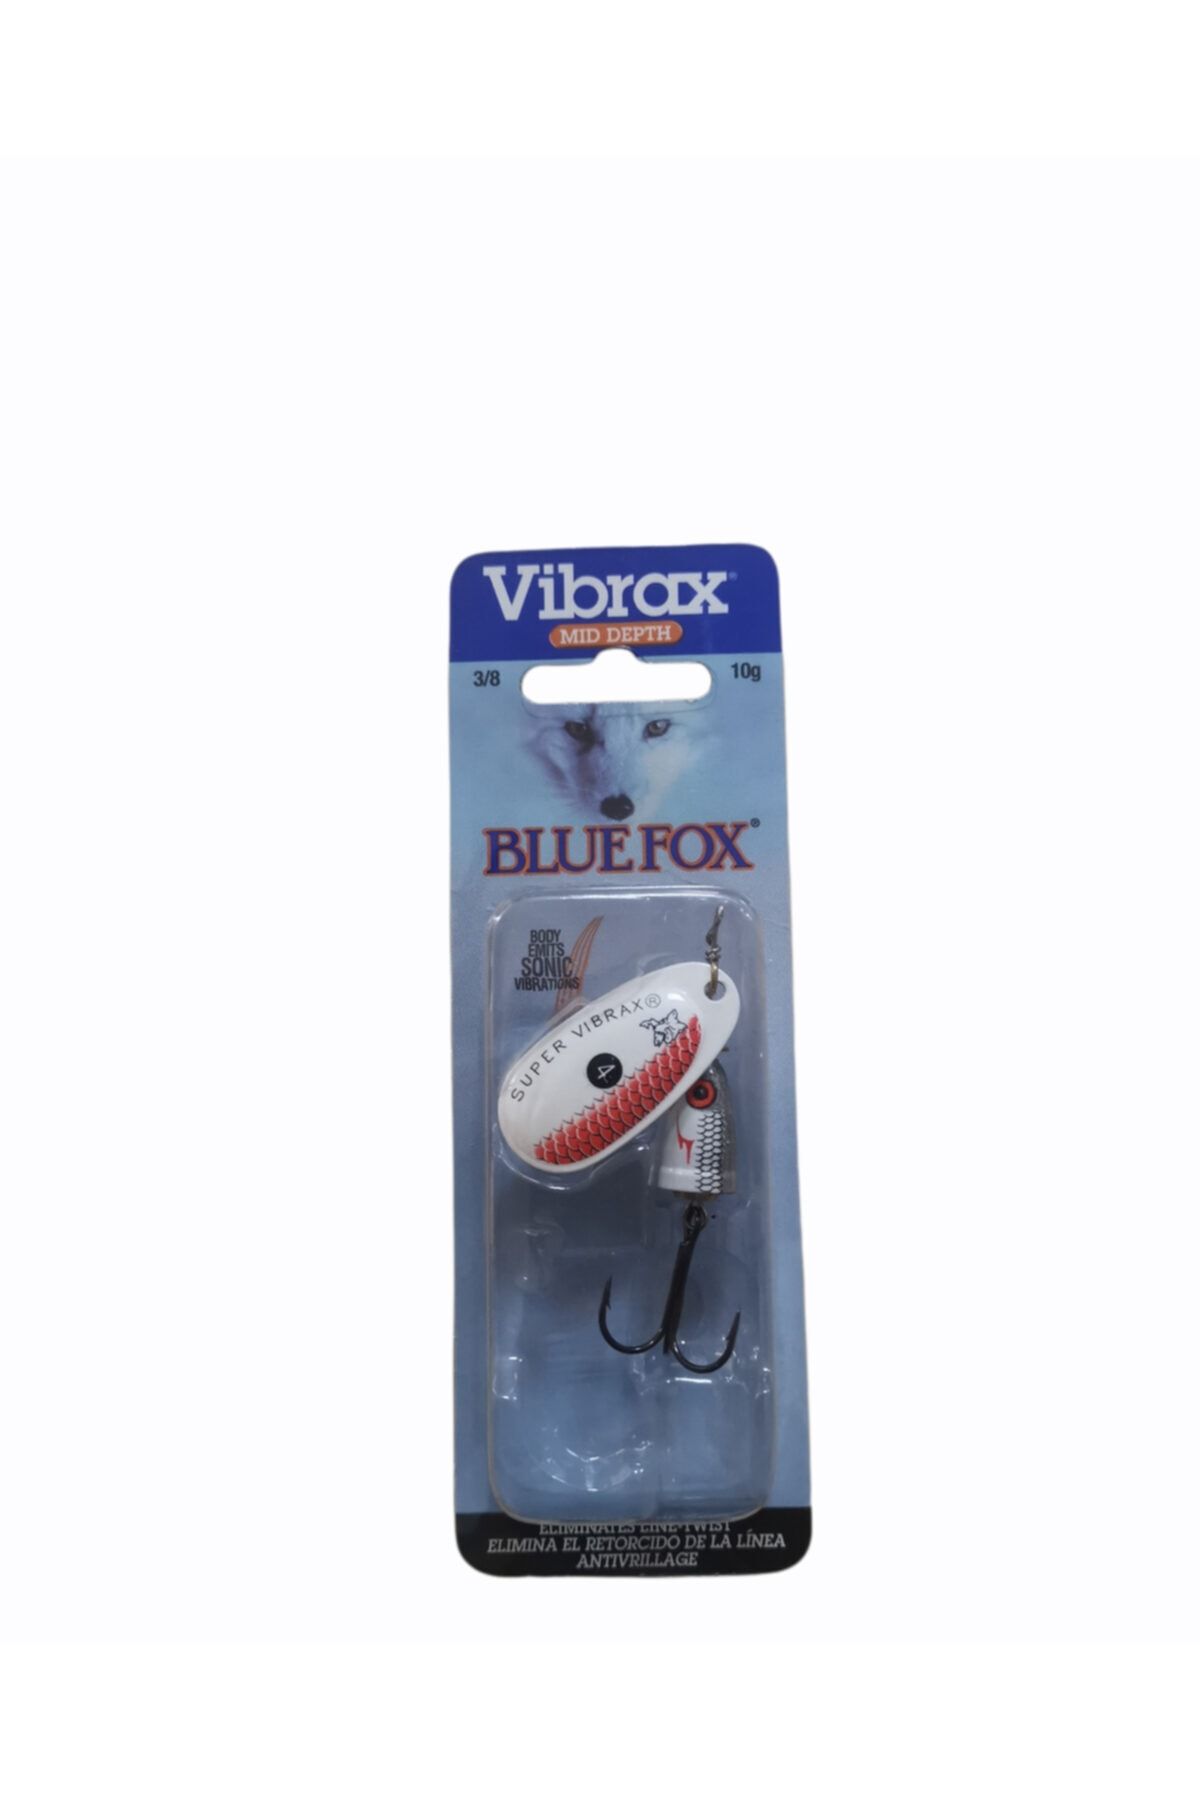 BlueFox Vibrax 4 No Beyaz Üzeri Kırmızı Turna Kaşığı